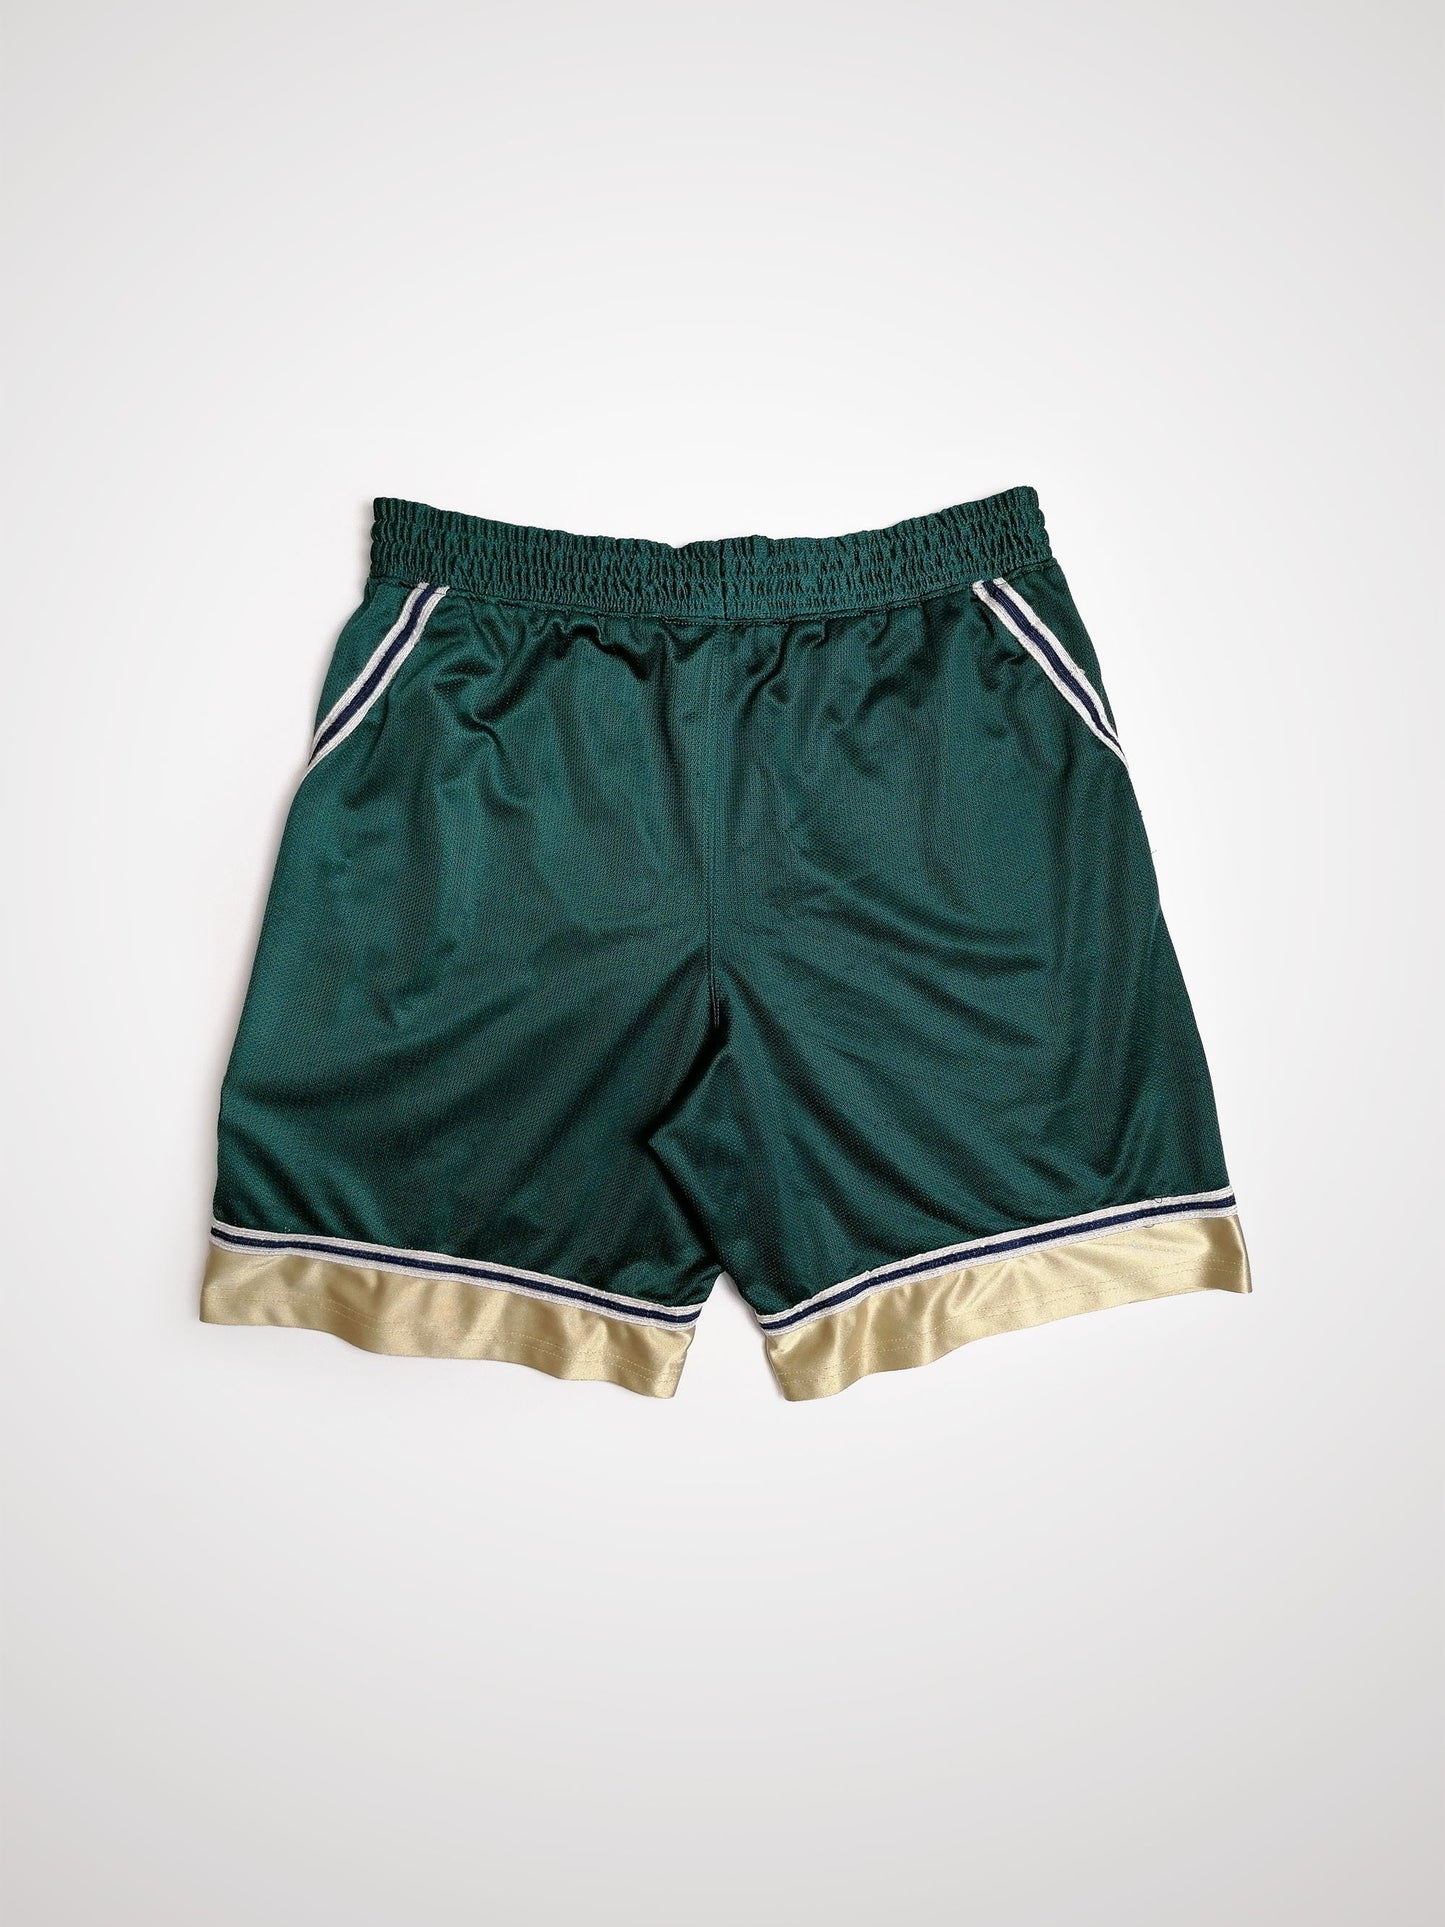 Vintage 90's NIKE Shorts Basketball - size M men / height 178 cm